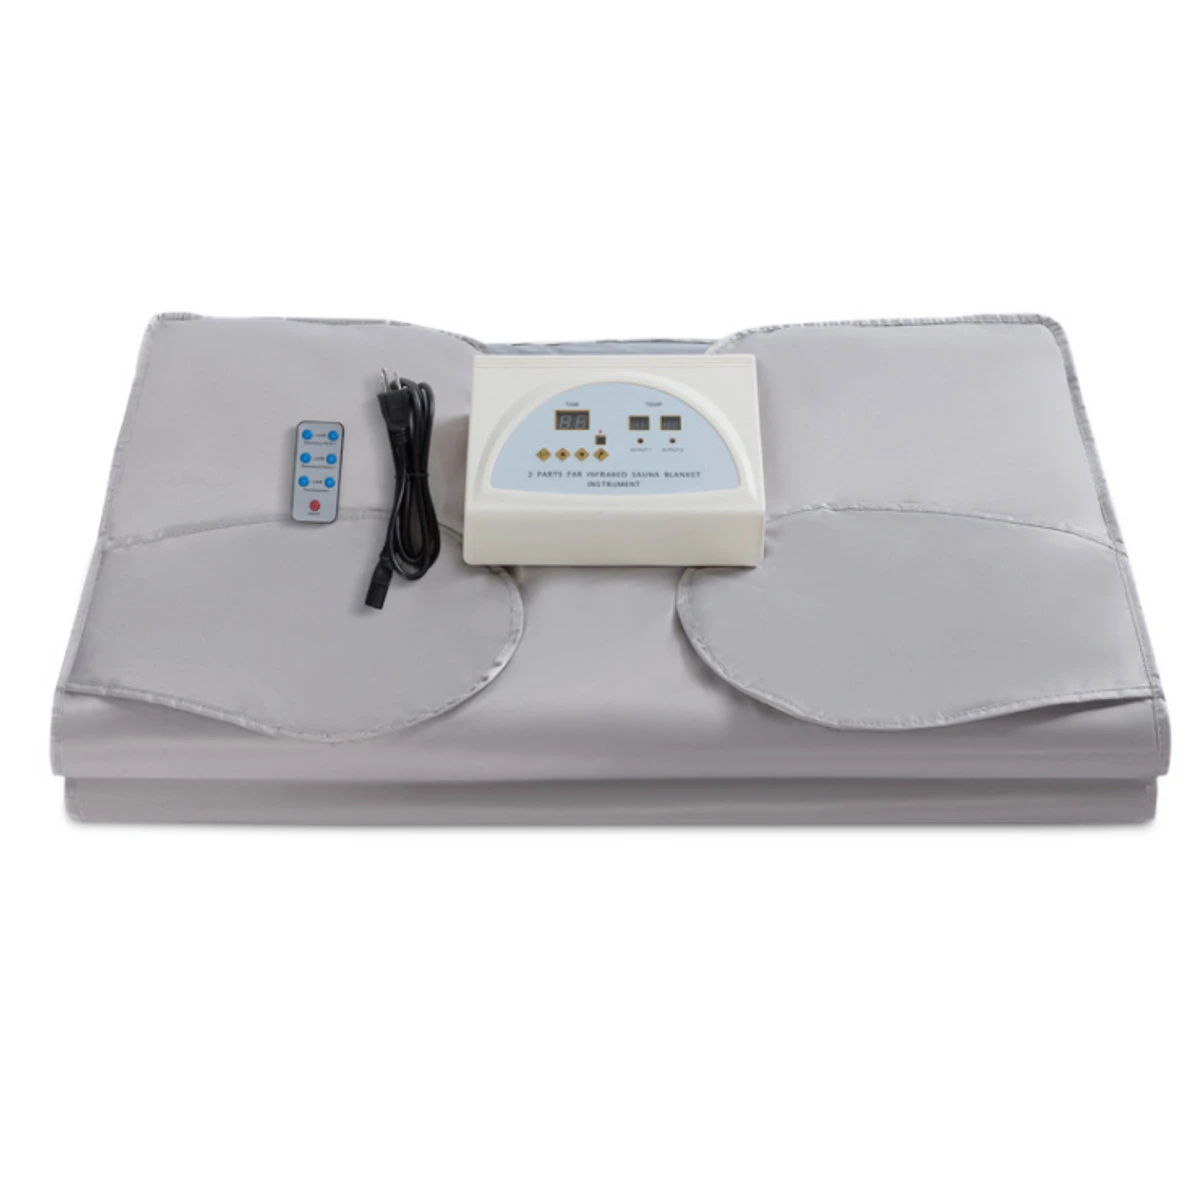 Find 110V/220V Far Infrared Sauna Blanket Detox Slimming Suit Home SPA Losing Weight Machine for Sale on Gipsybee.com